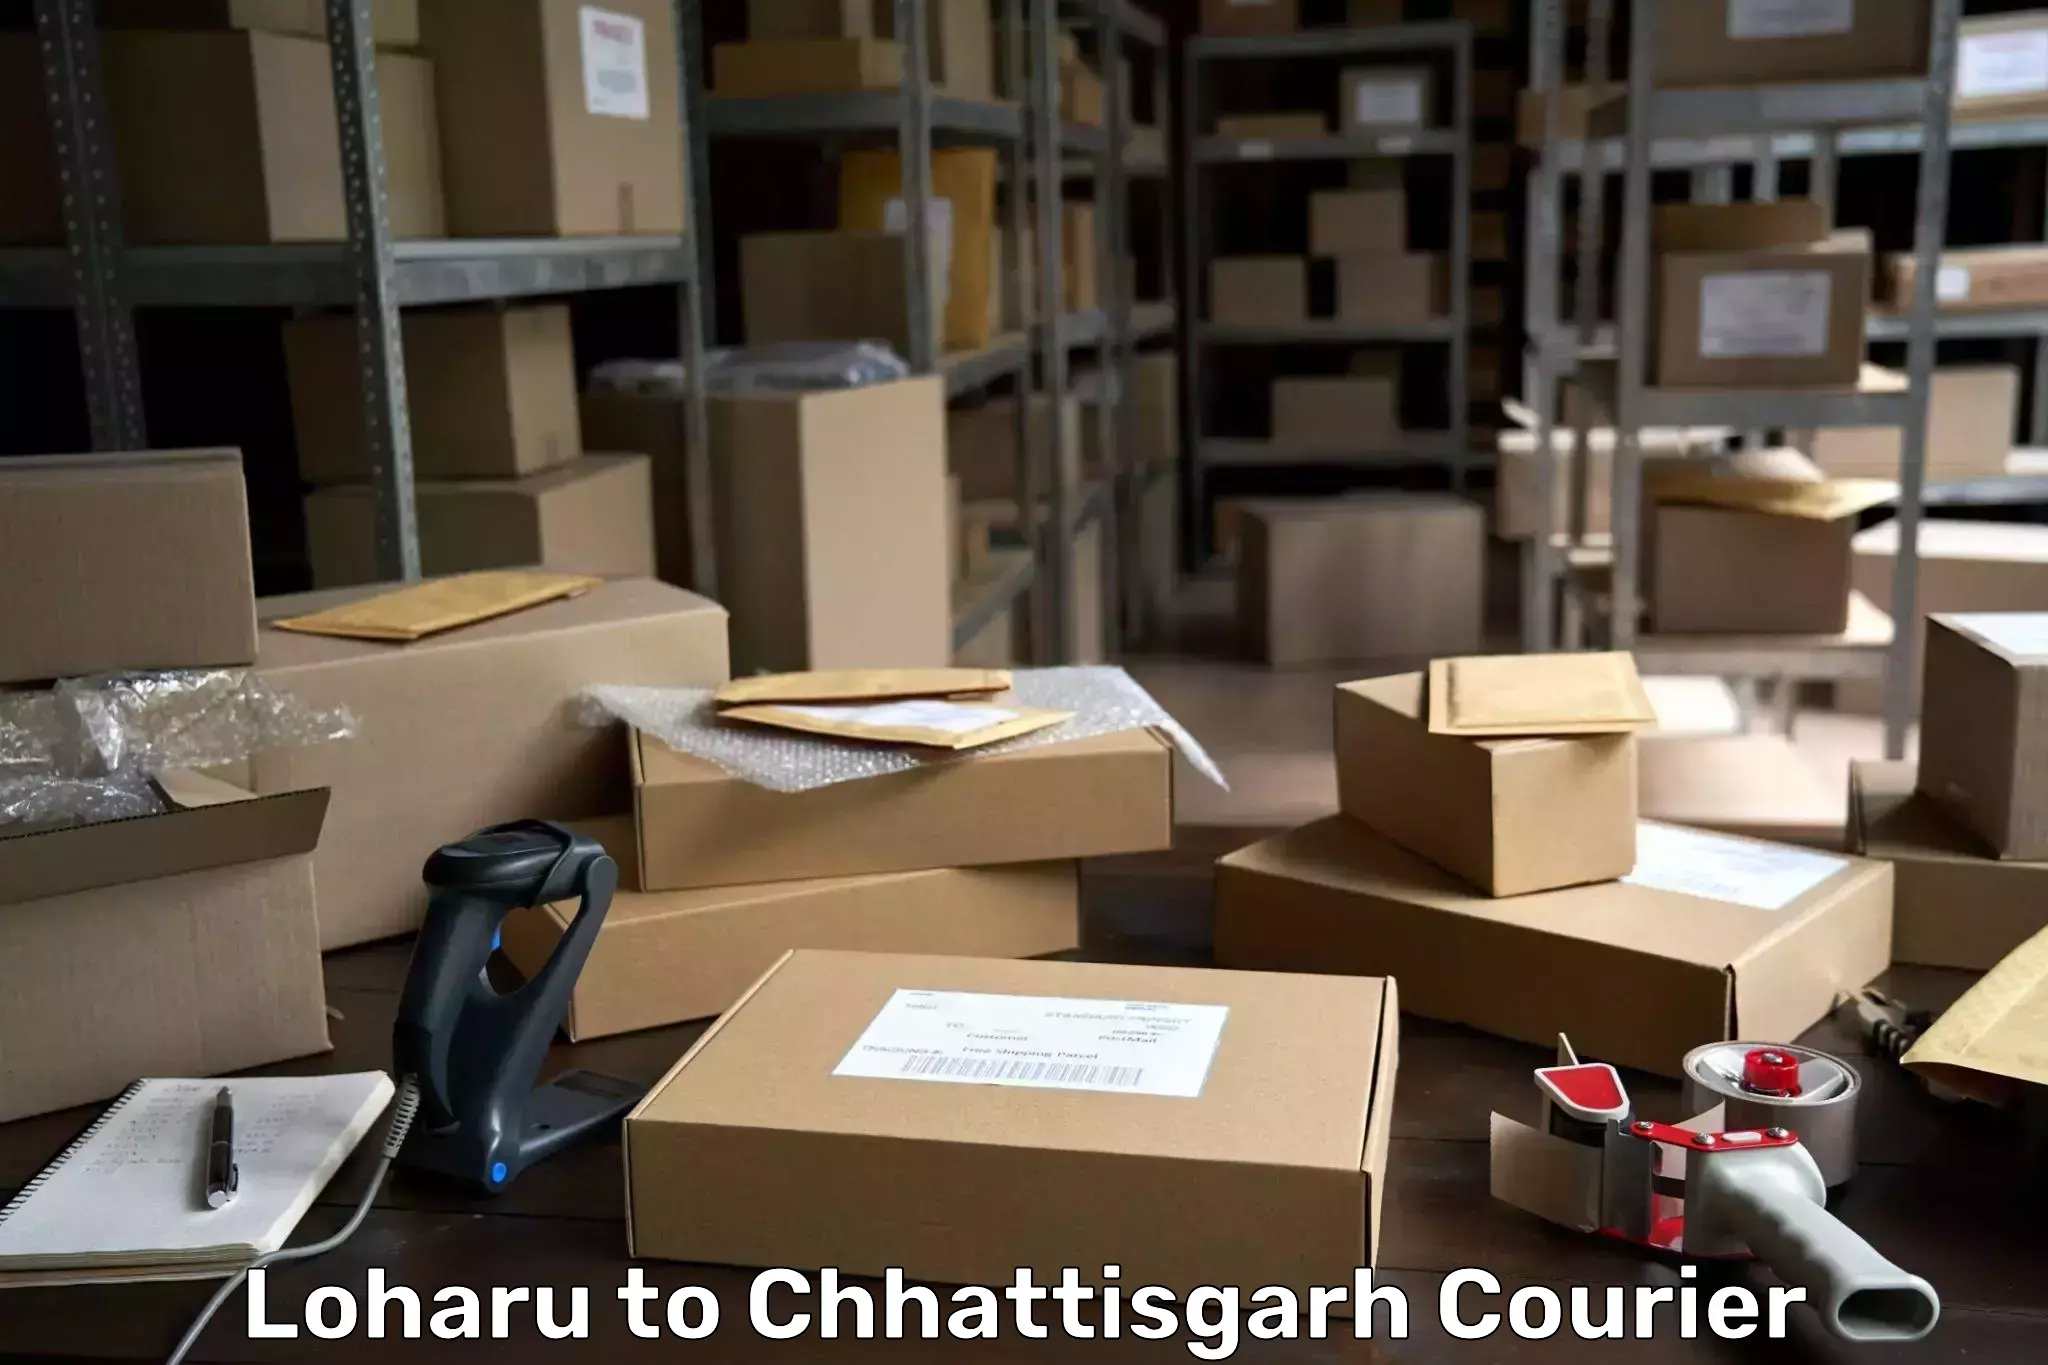 International courier networks Loharu to Korea Chhattisgarh